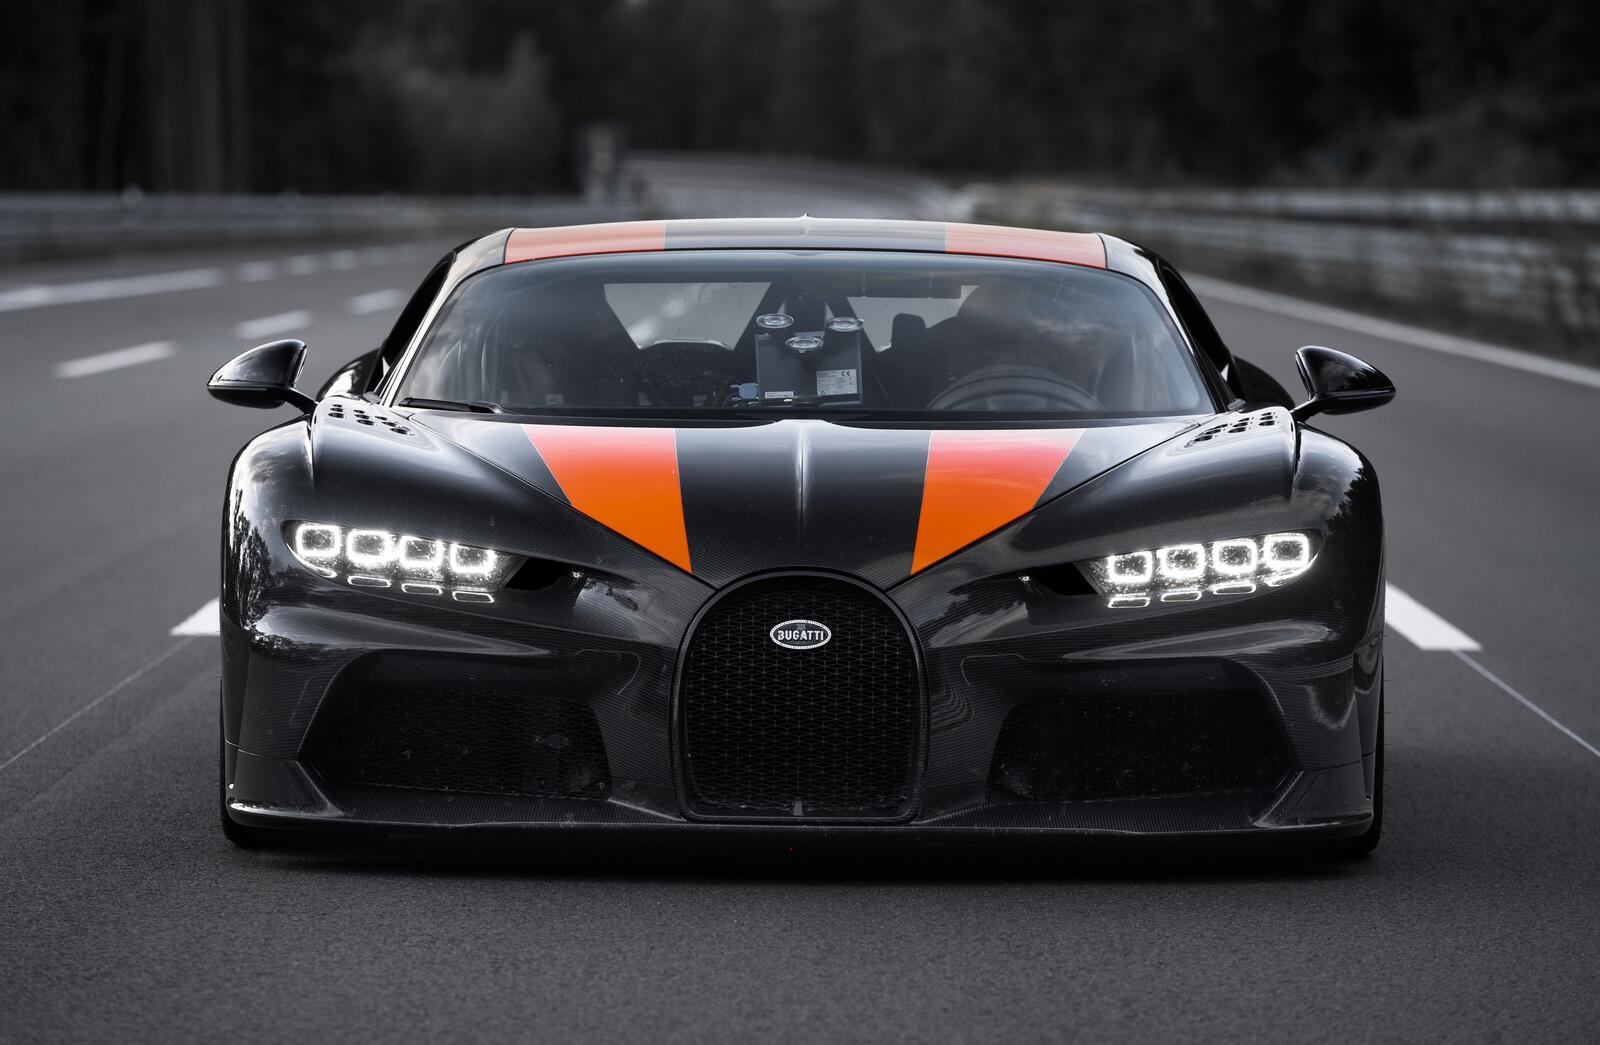 Free photo Black Bugatti Chiron with orange stripes on the hood